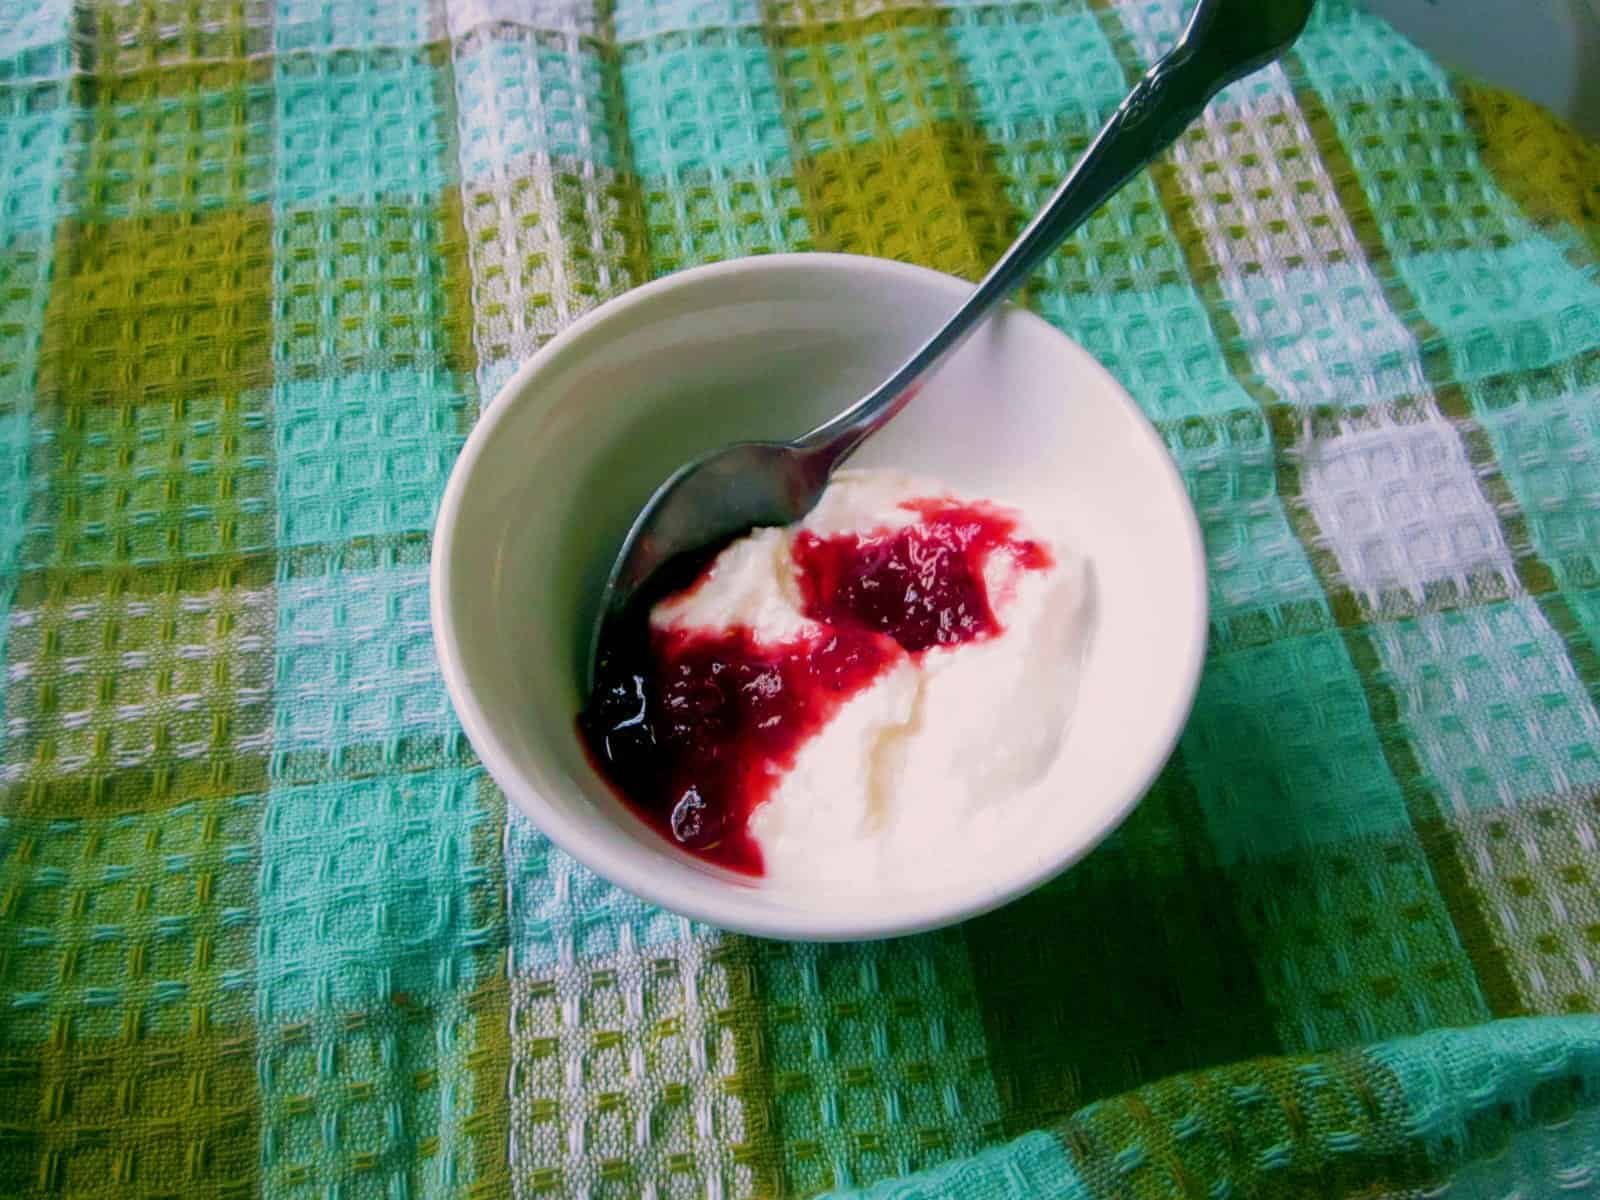 lactose-free yogurt and jam